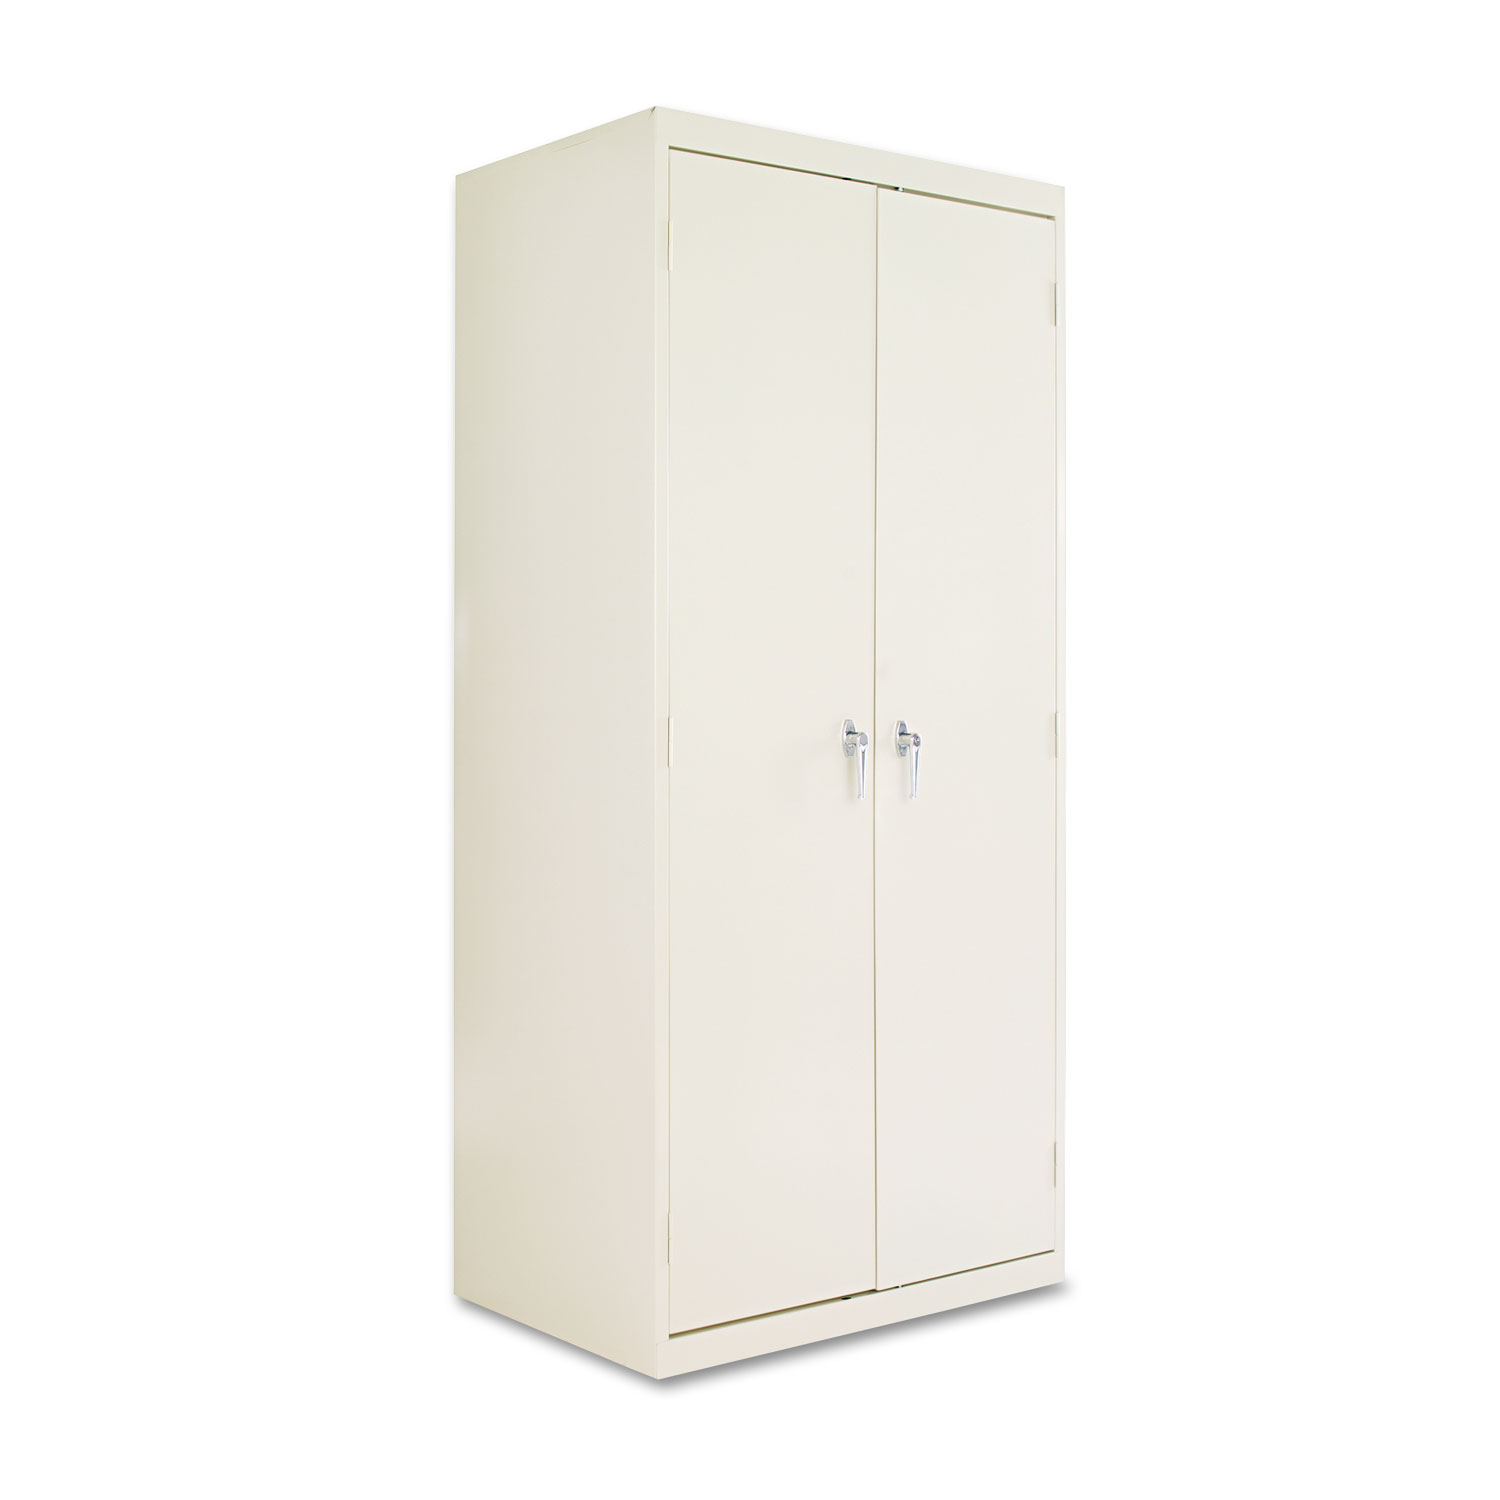  Alera ALECM7824PY Assembled 78 High Storage Cabinet, w/Adjustable Shelves, 36w x 24d, Putty (ALECM7824PY) 